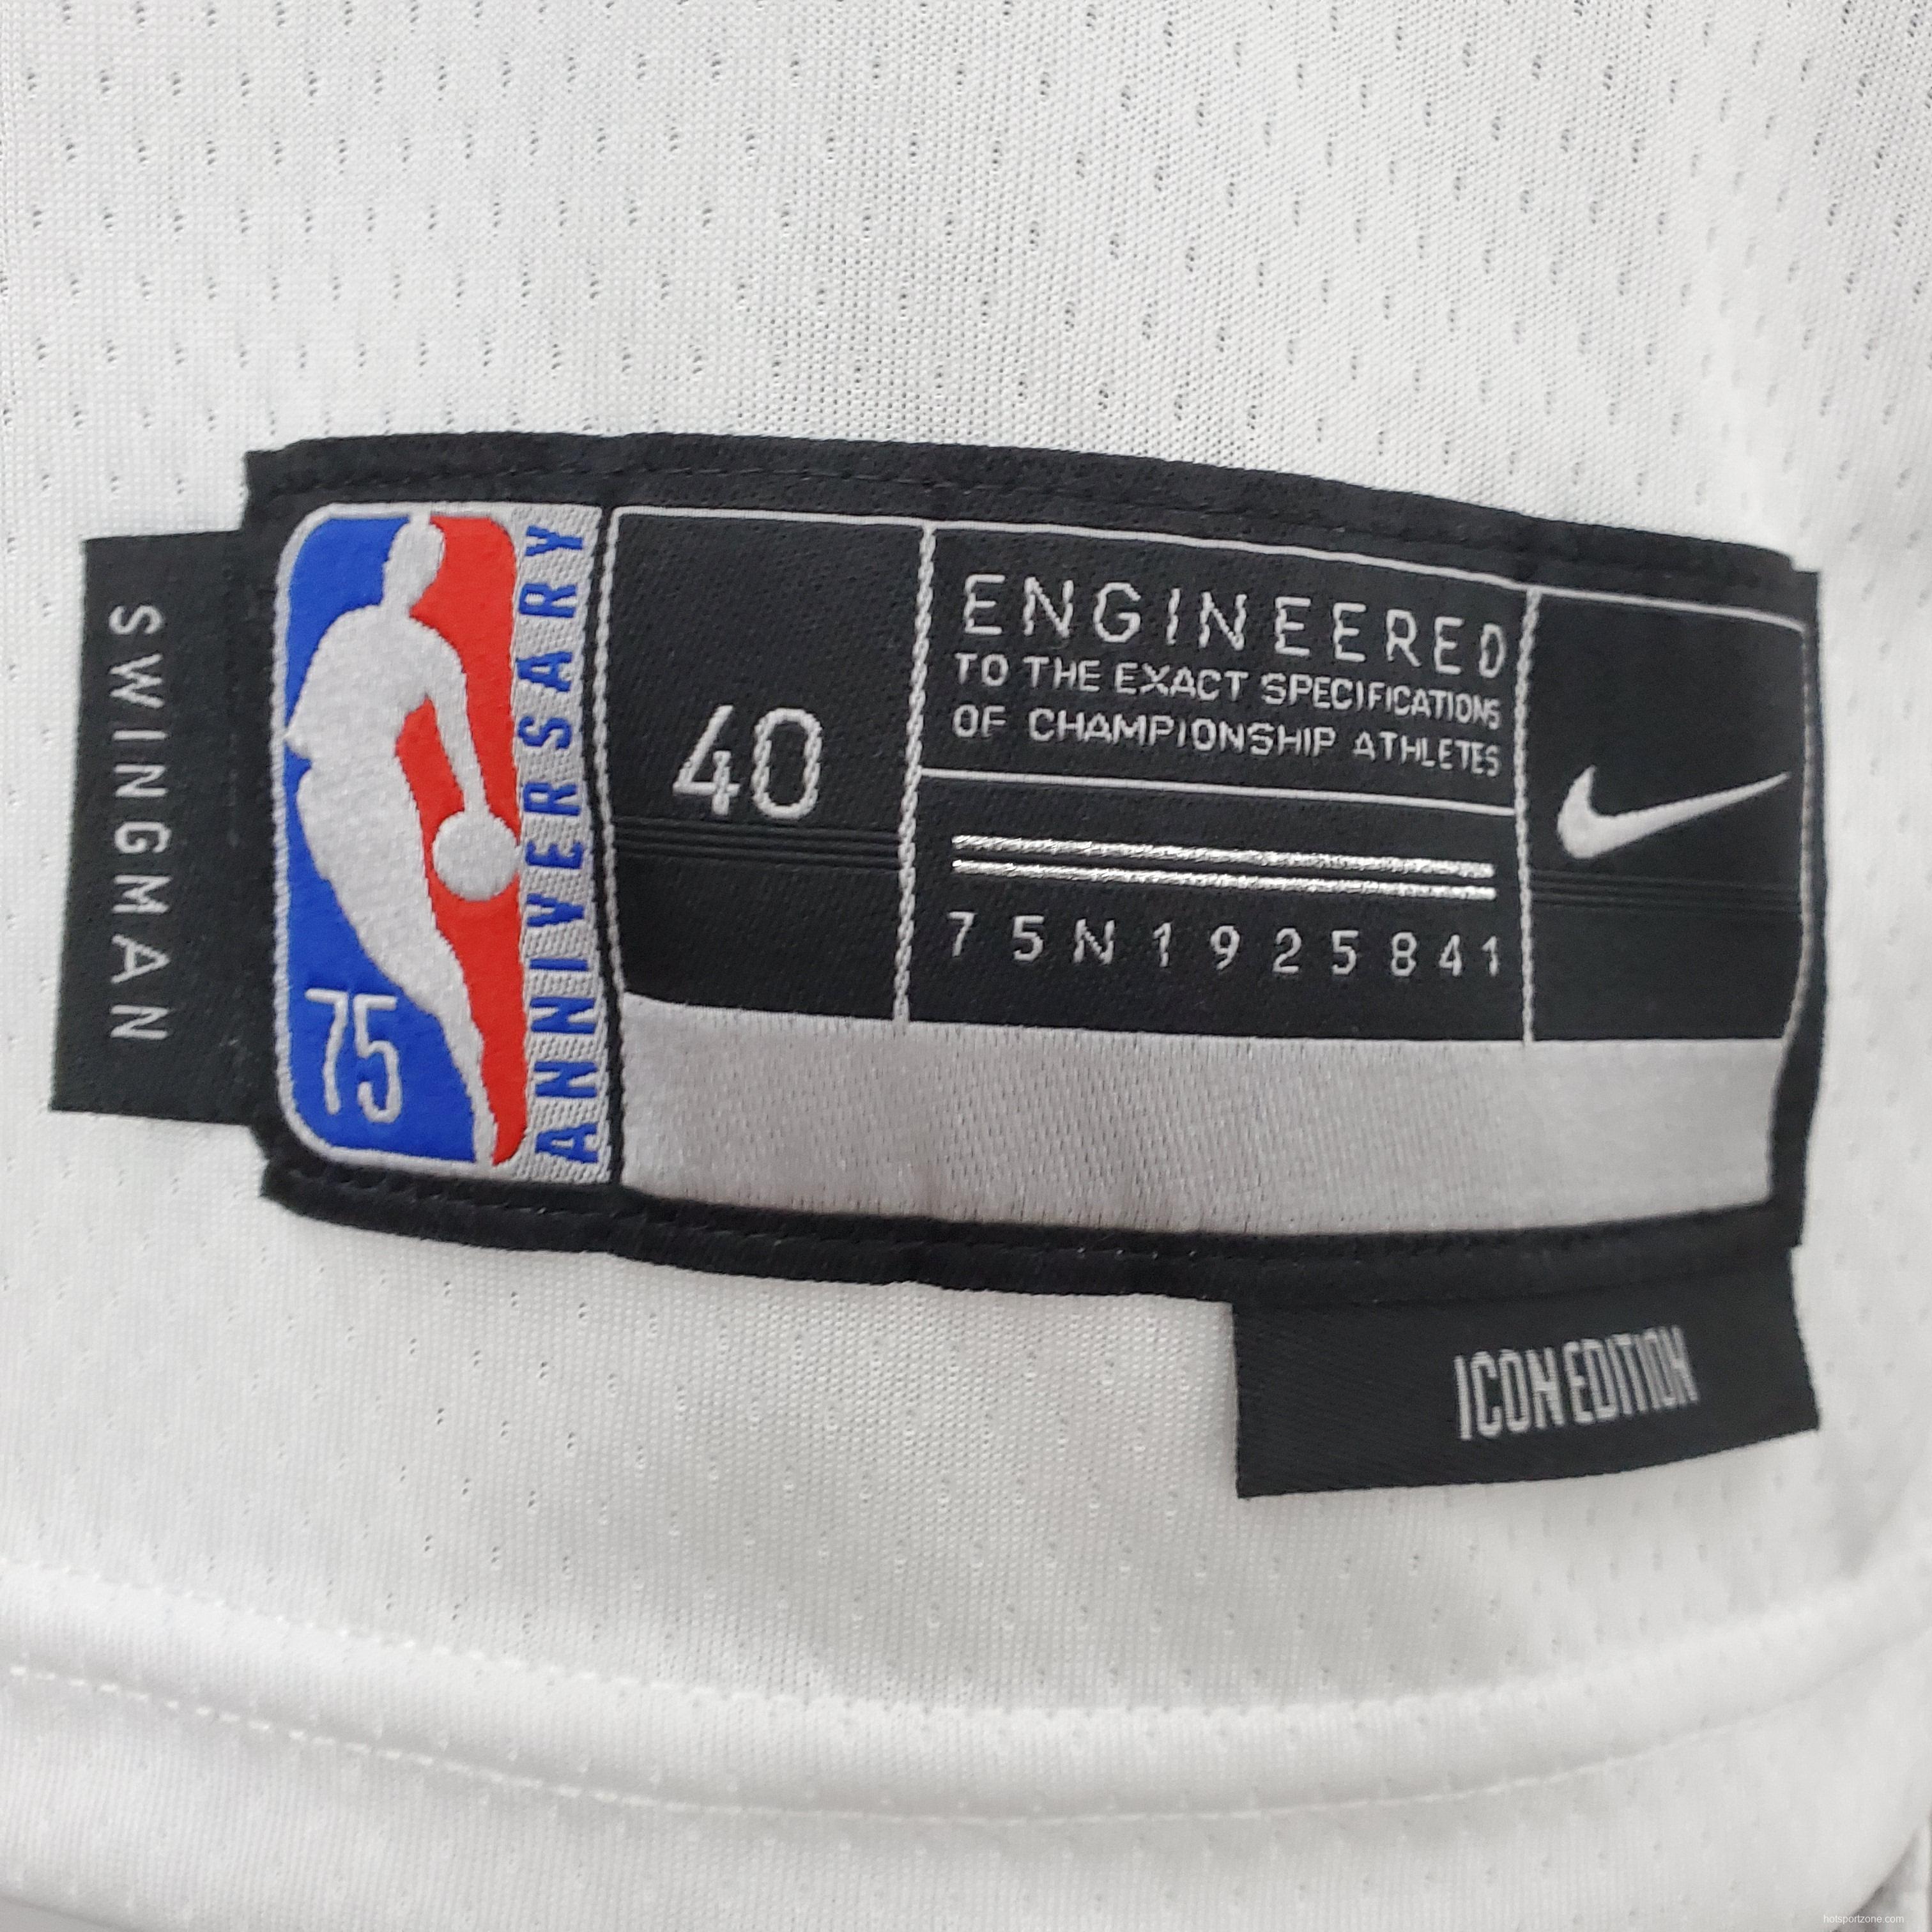 NBA 75th Anniversary Simmons #10 Nets White Jersey